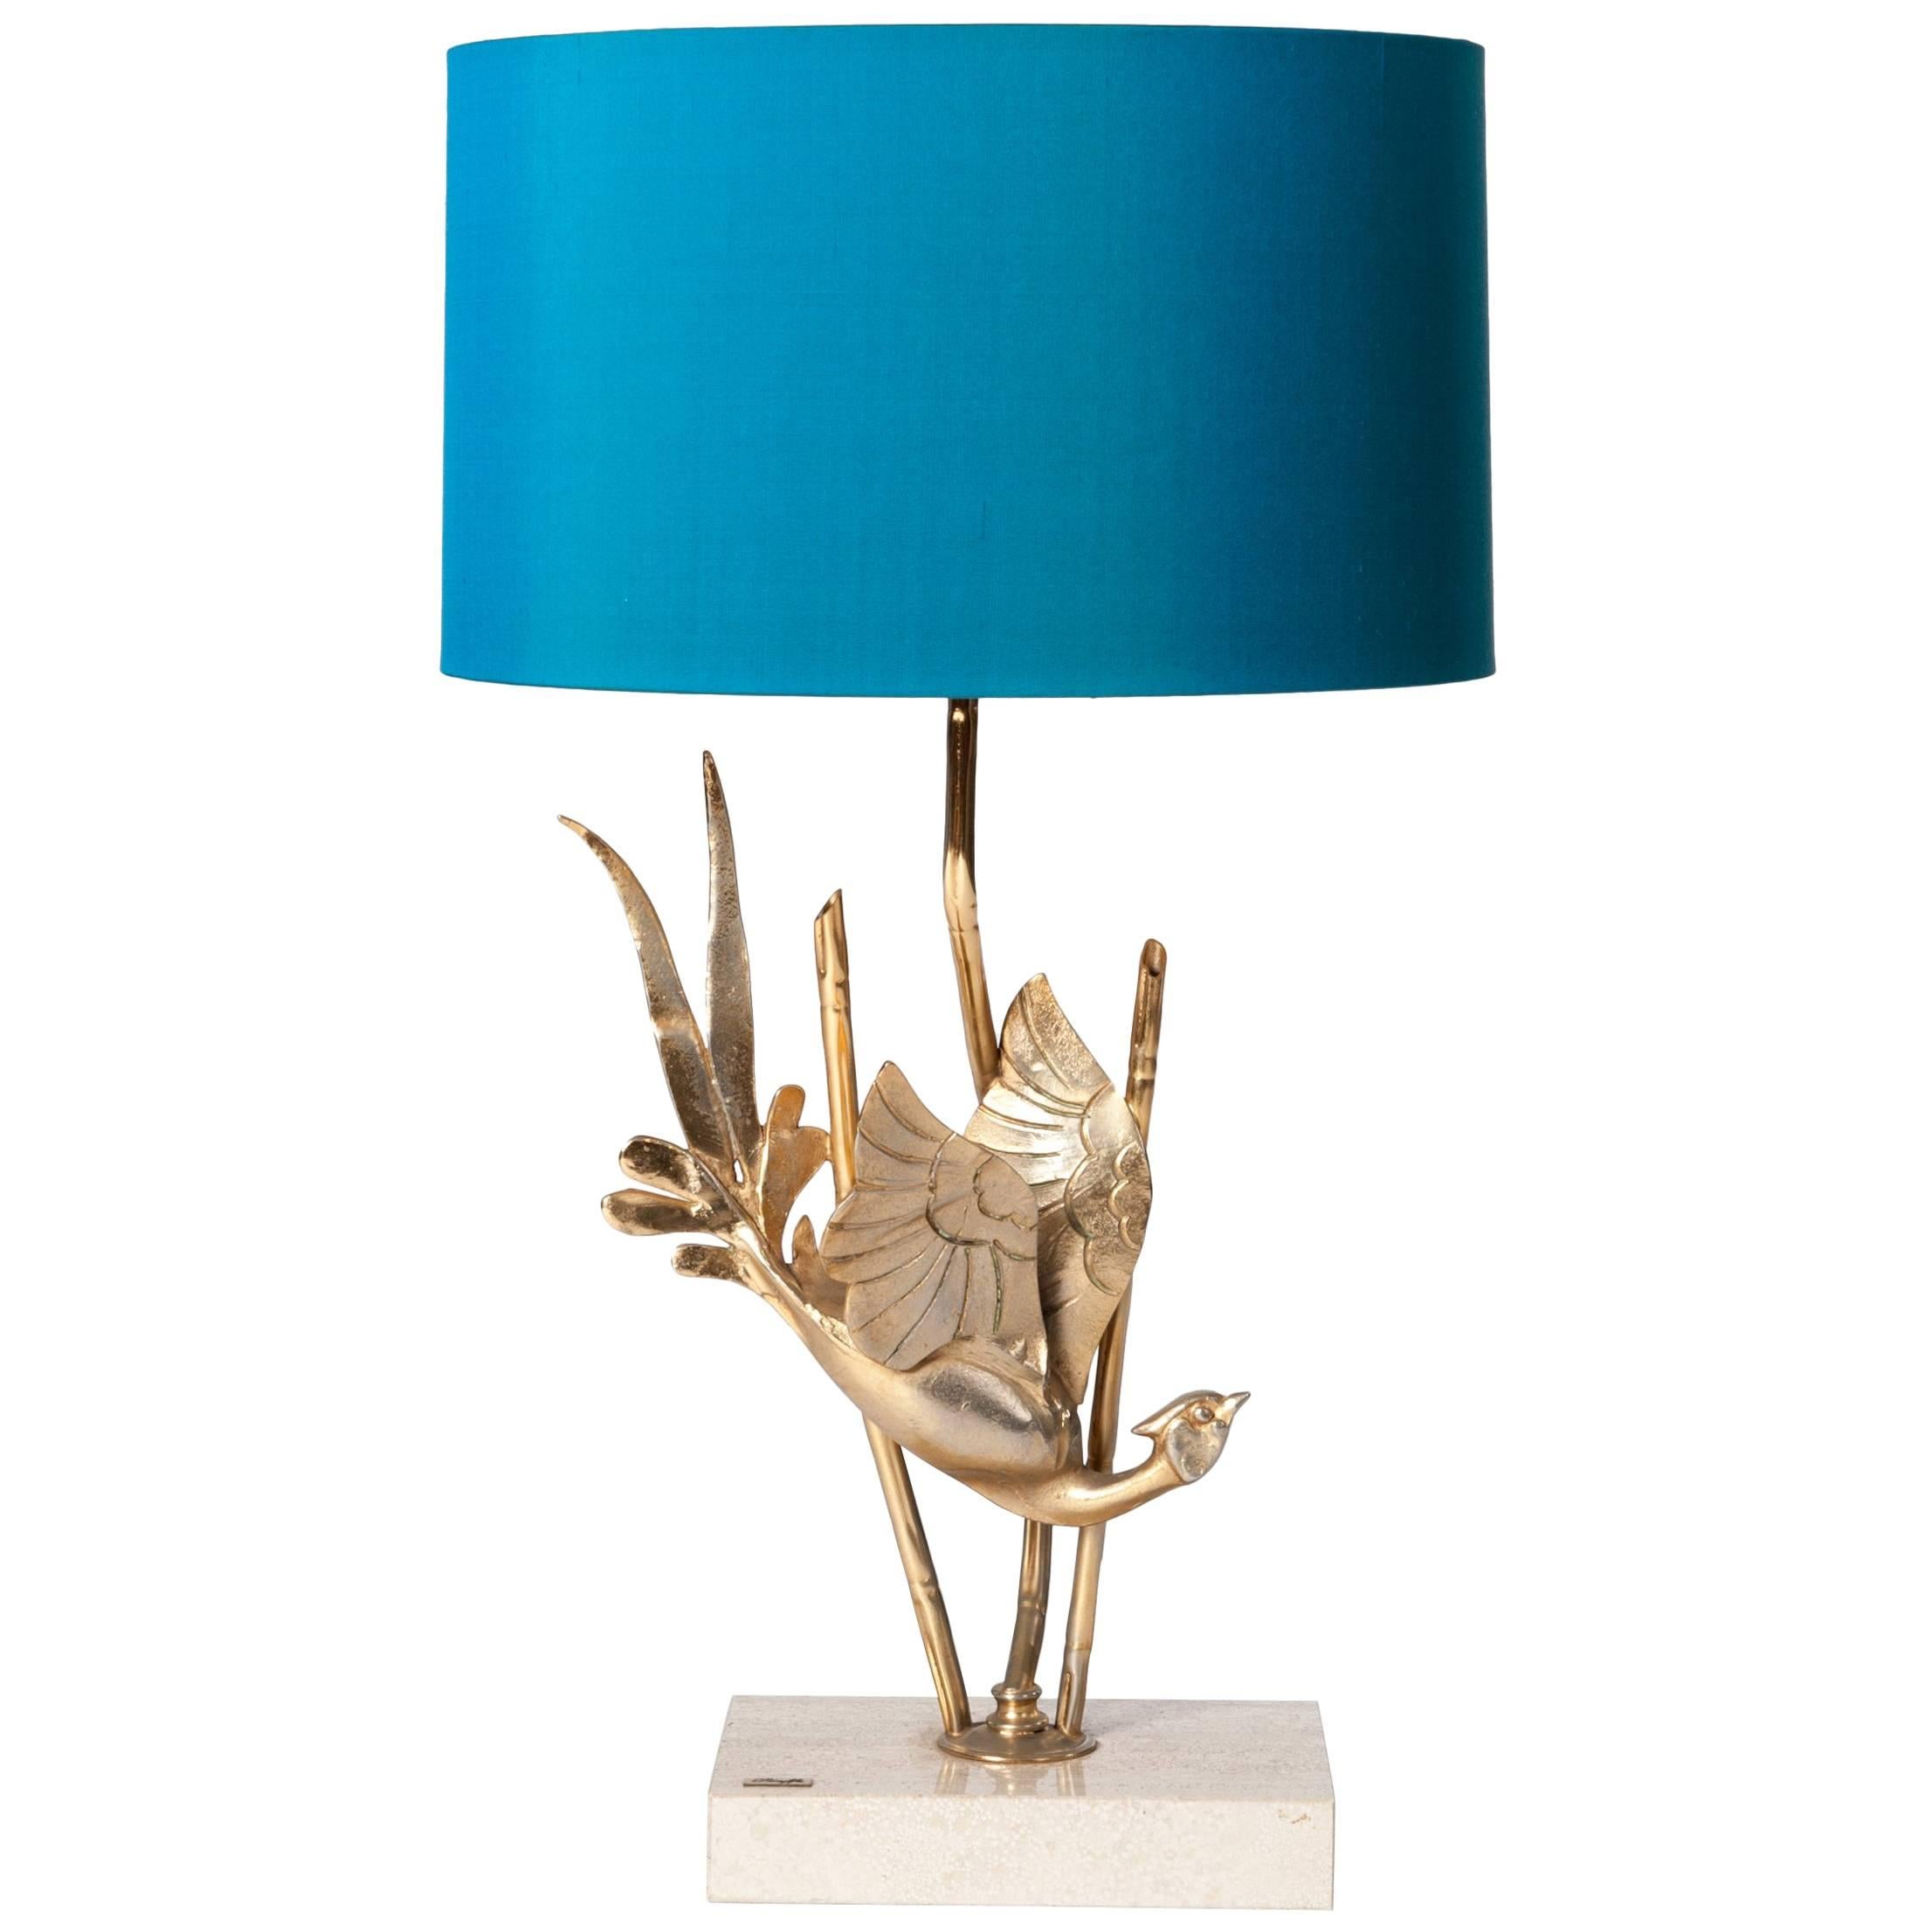 Midcentury Italian Brass Sculptured Table Lamp Sign, Pieffe Turquois Lamp Shade